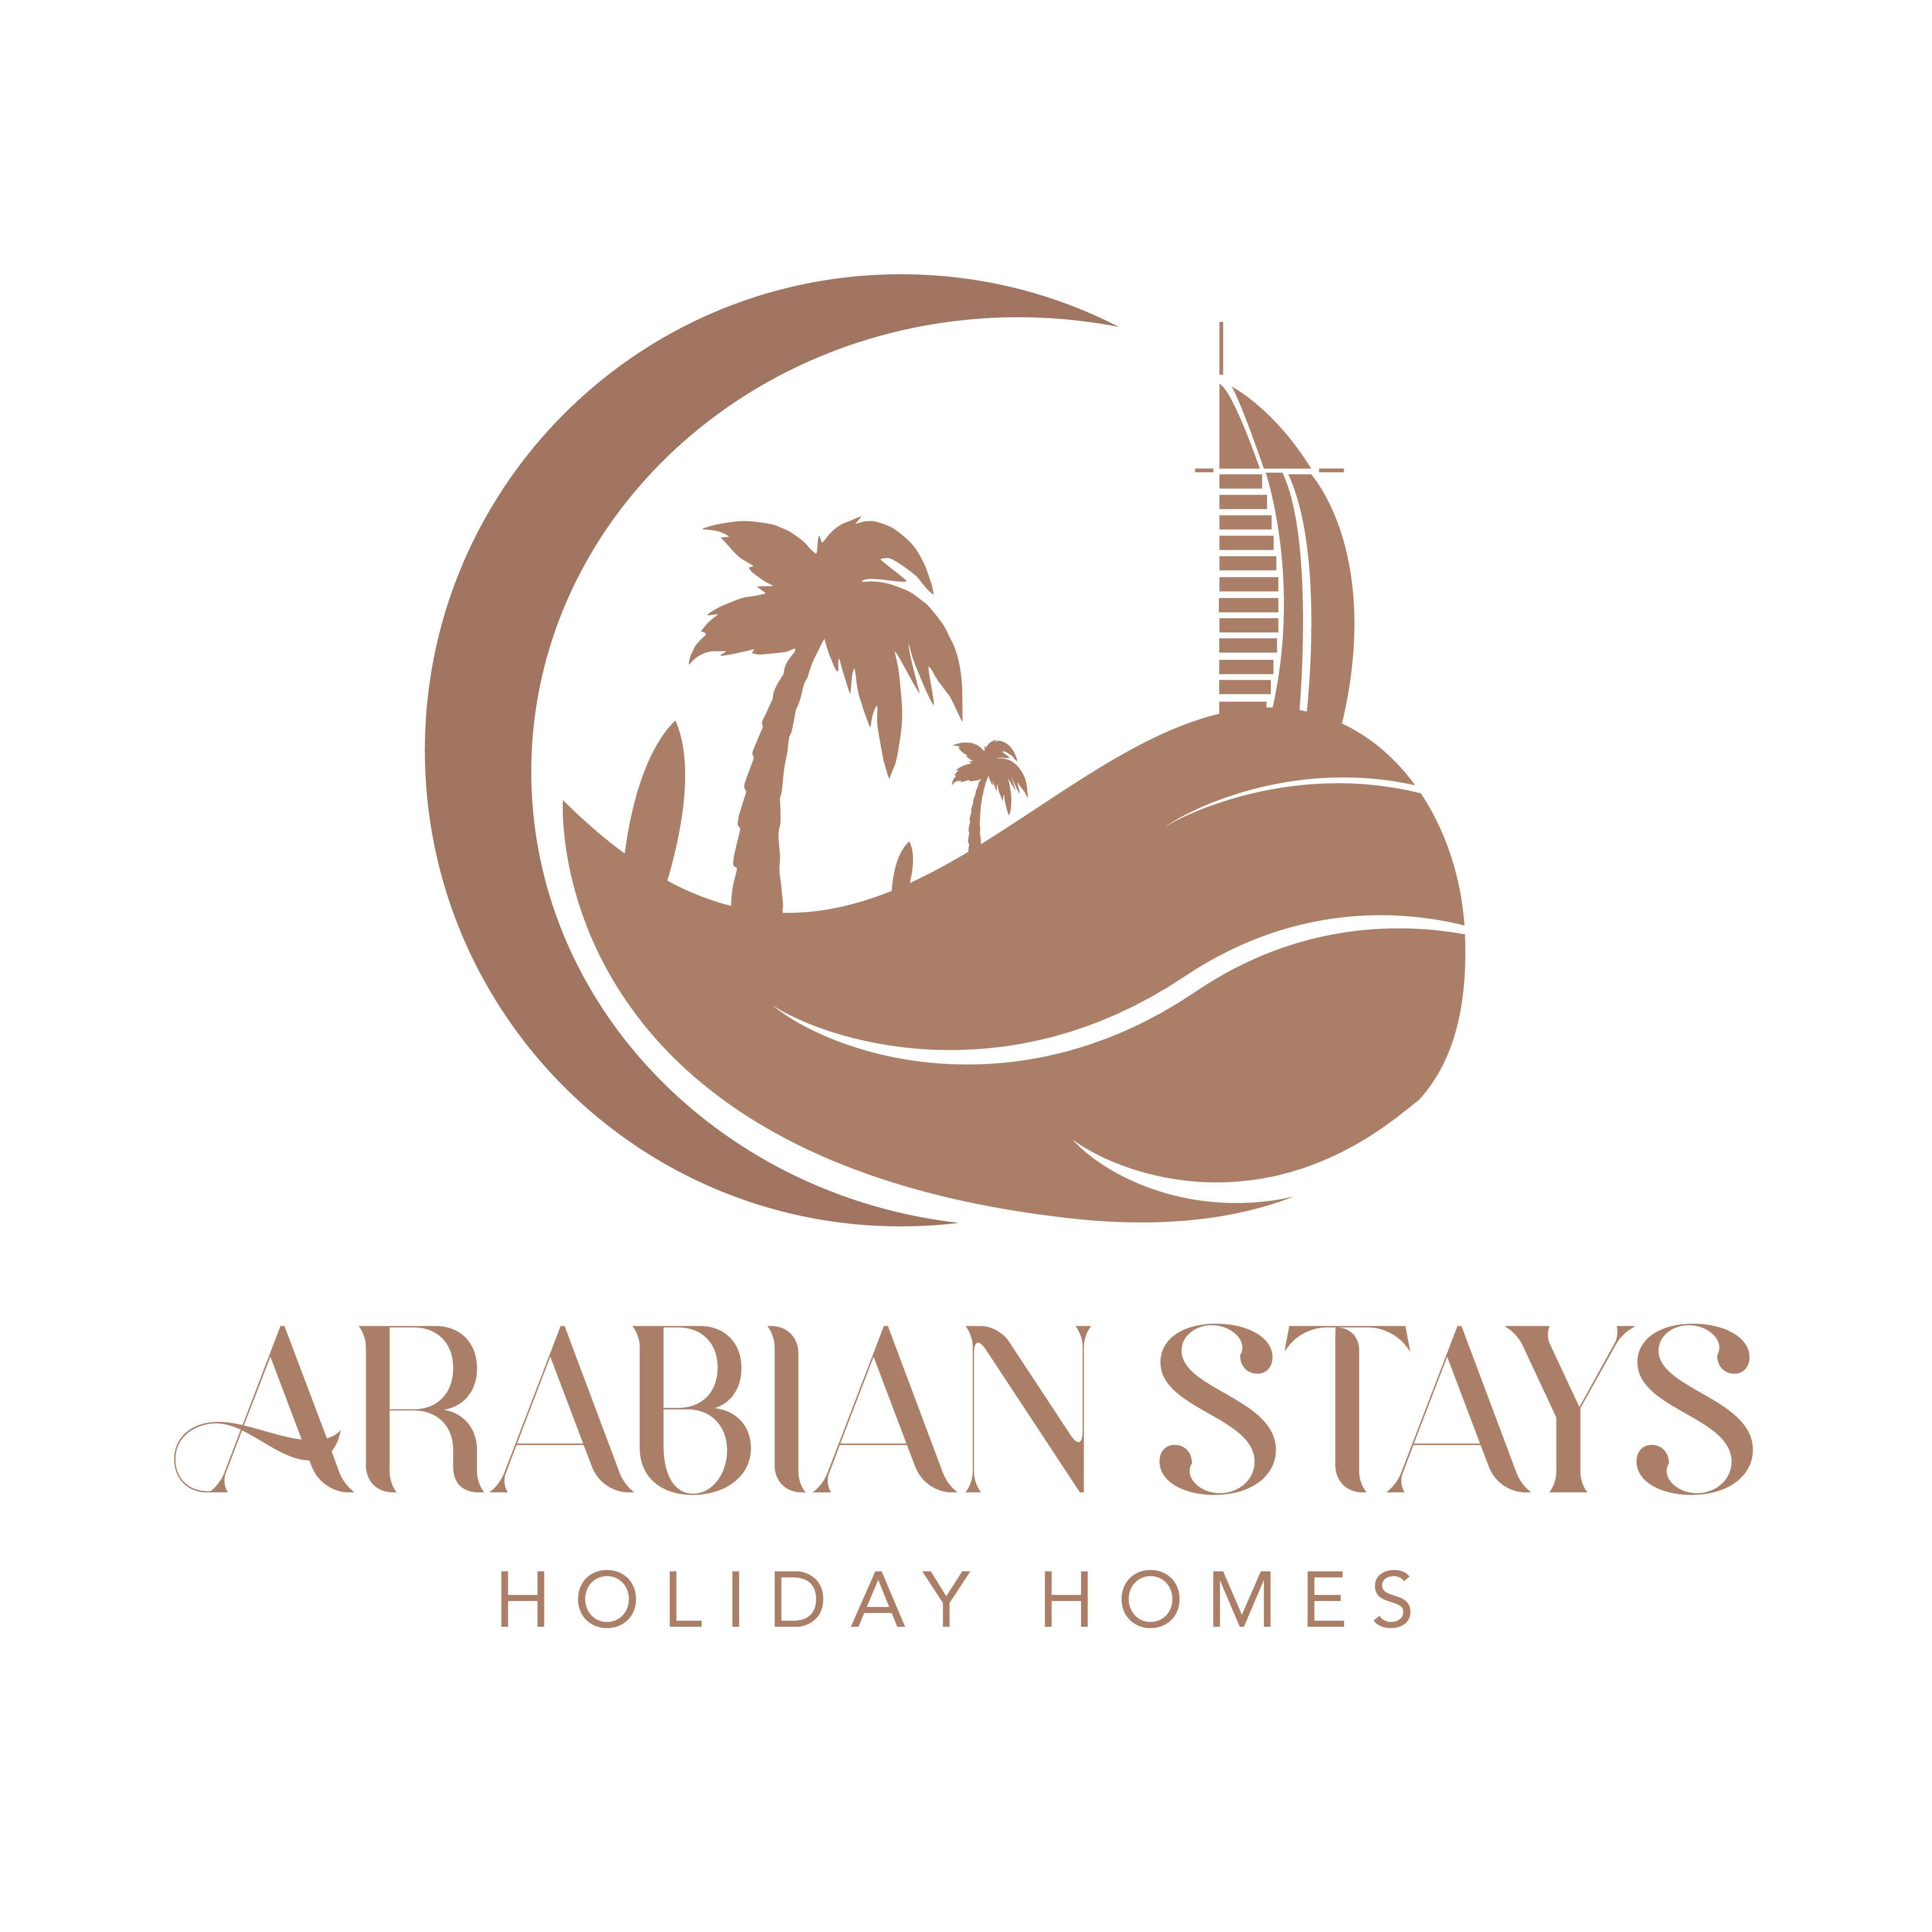 Arabian Stays Holiday Homes